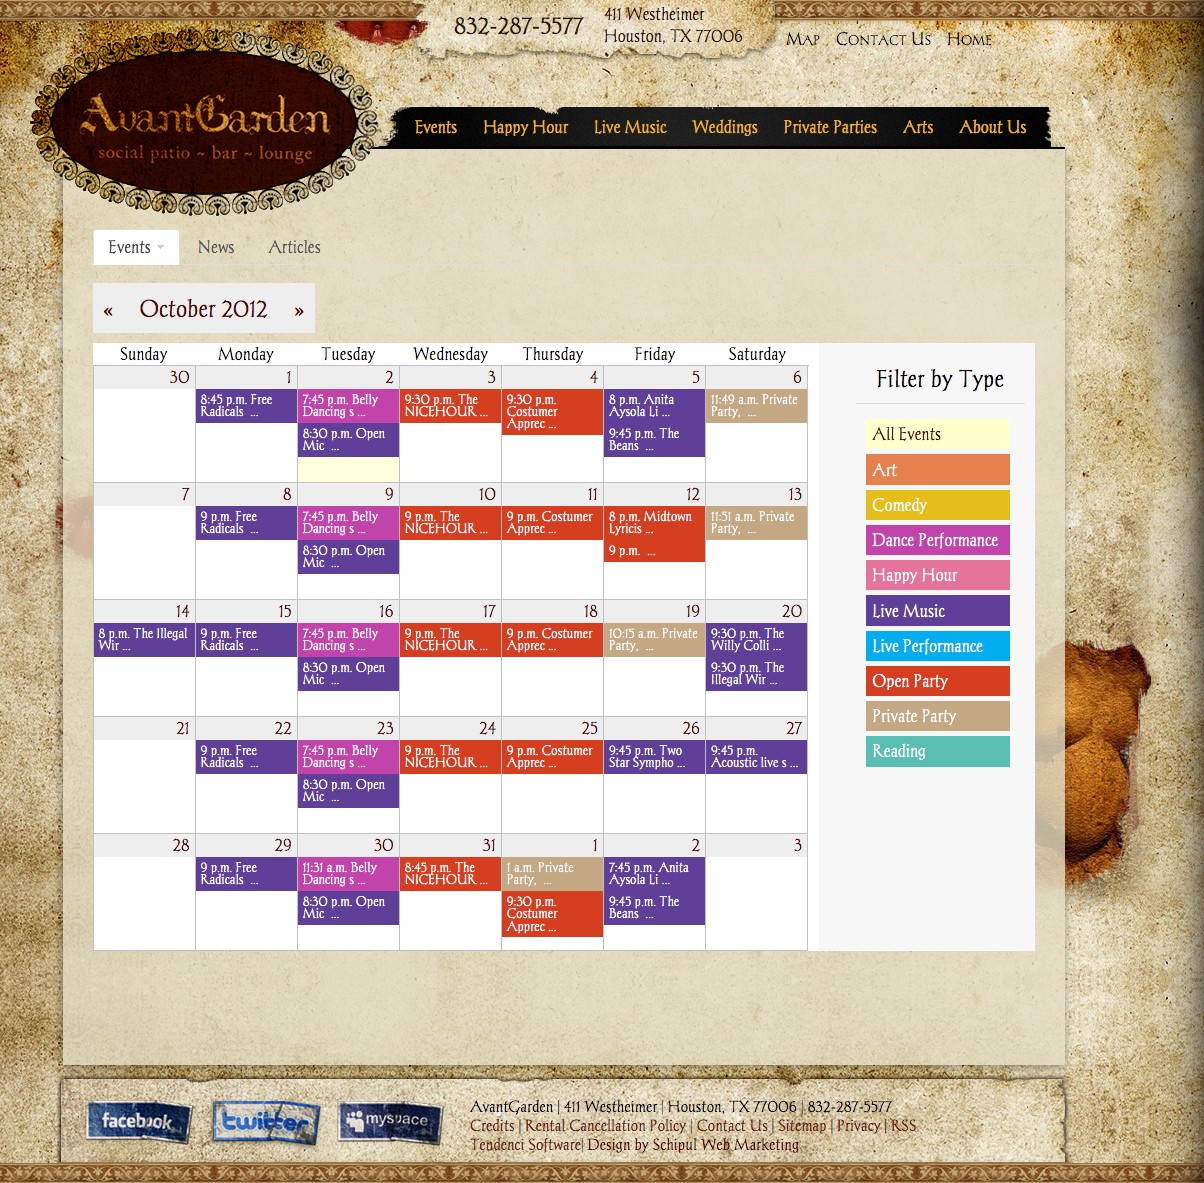 Avant Garden Houston Events Calendar Screenshot using Tendenci